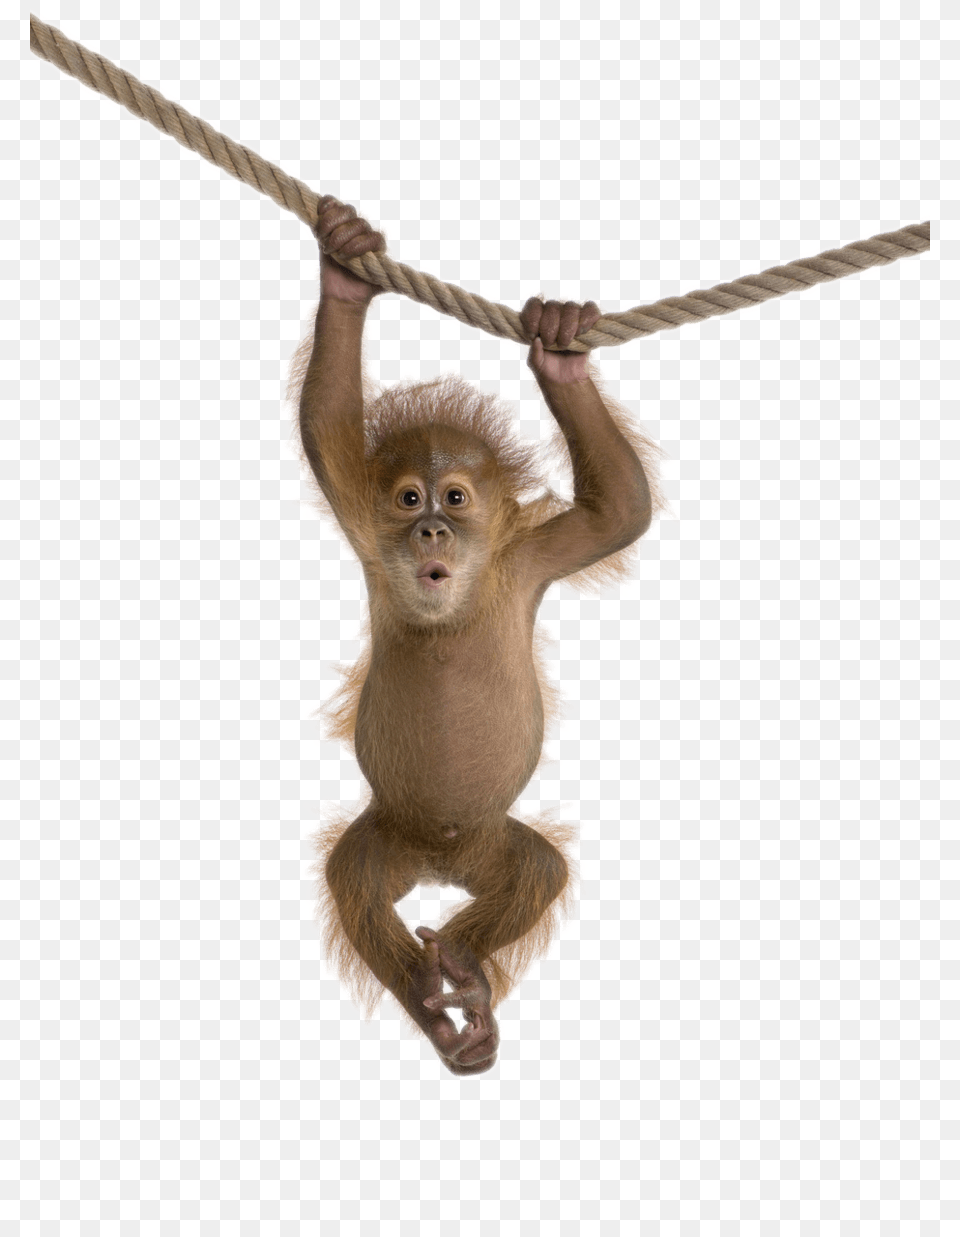 Monkey On Rope, Animal, Mammal, Wildlife Png